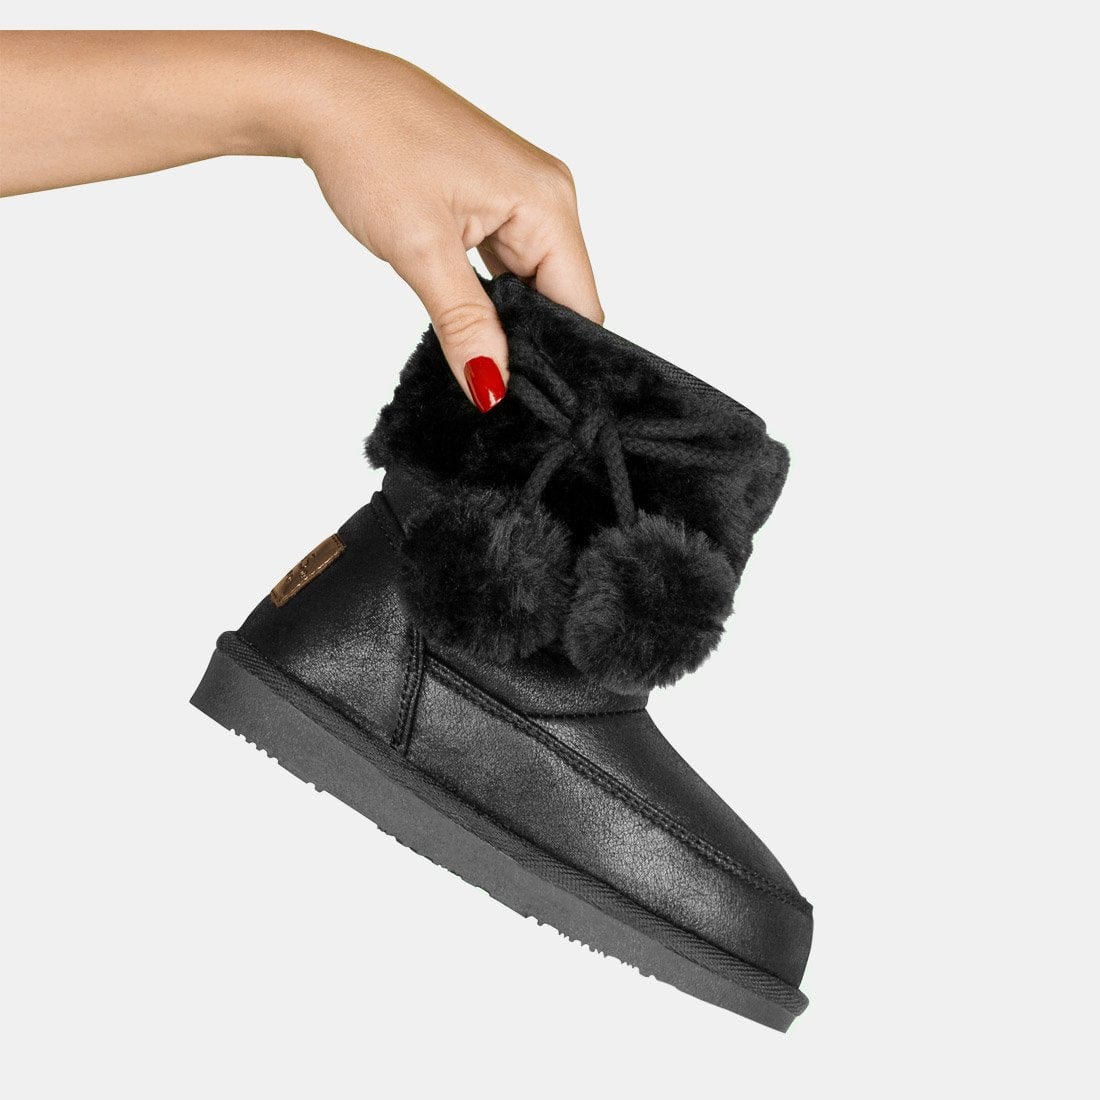 FRESAS CON NATA Shoes Girl's Black Pompoms Fur Australian Boots